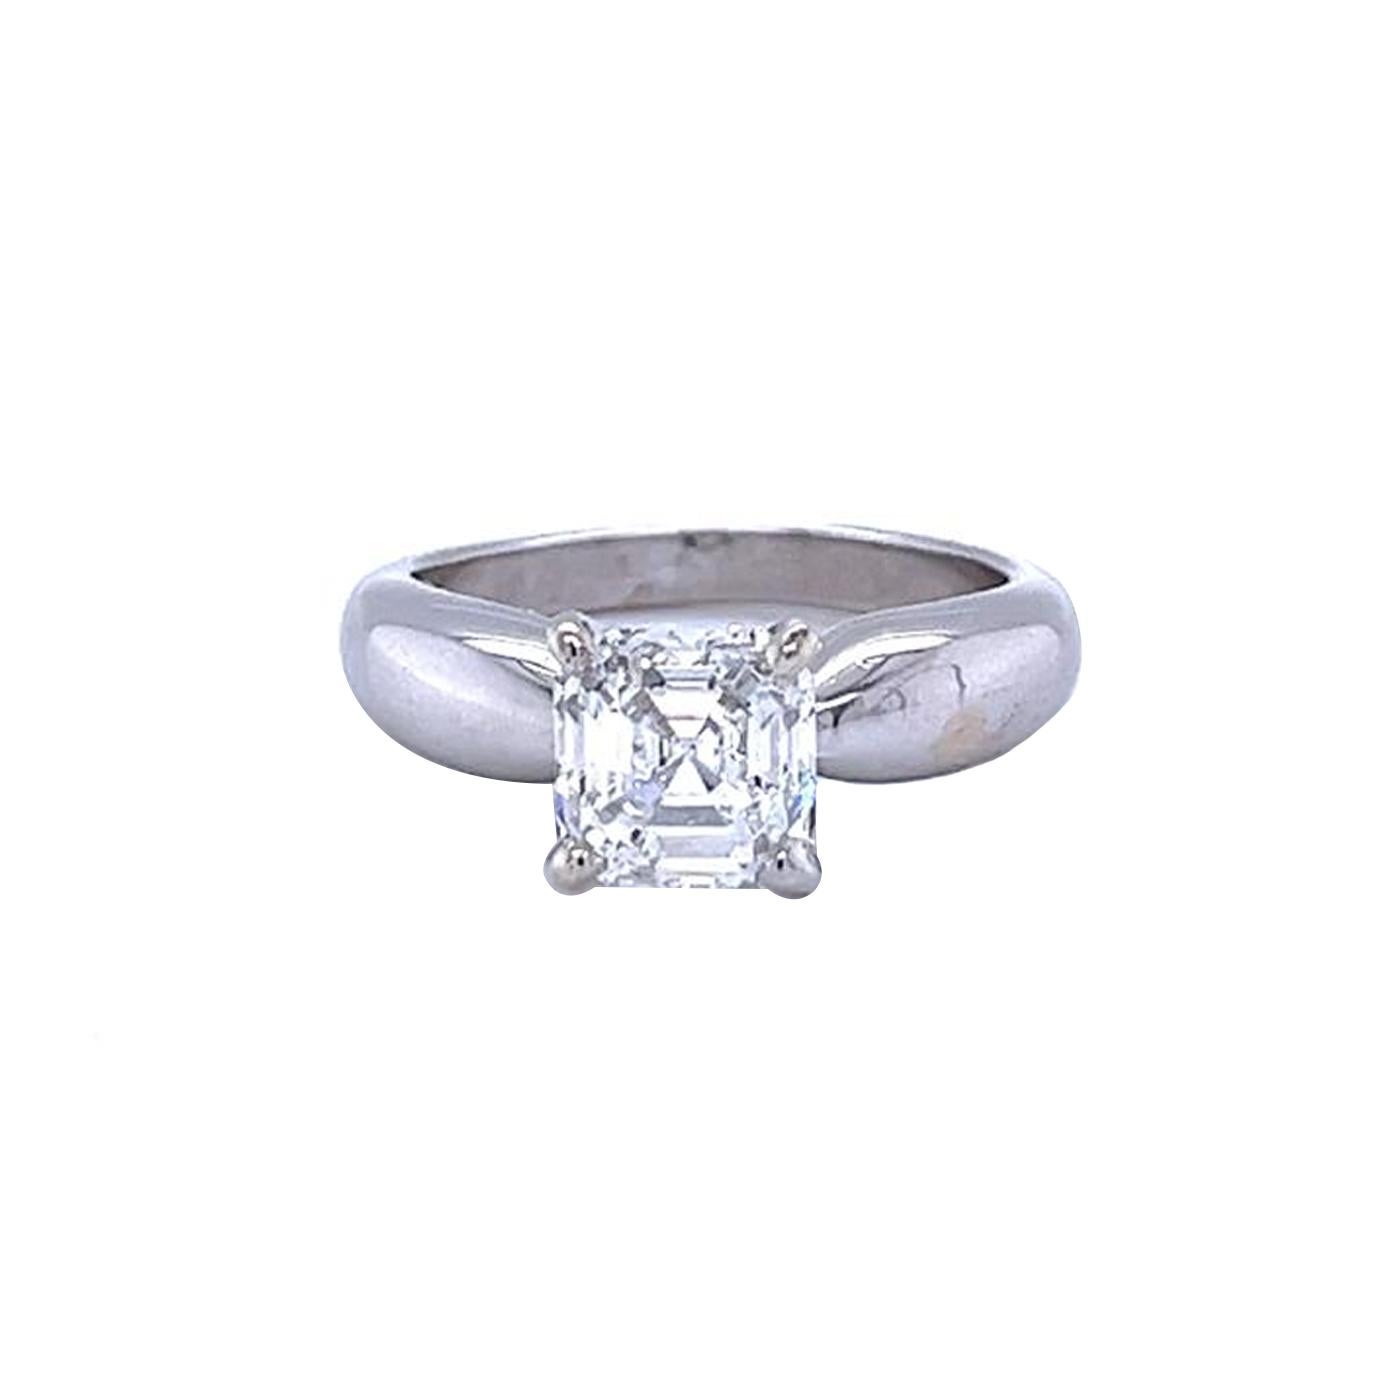 Modernist Flawless GIA Certified 2.01 Carat Asscher Cut Diamond Ring 18 Karat White Gold For Sale